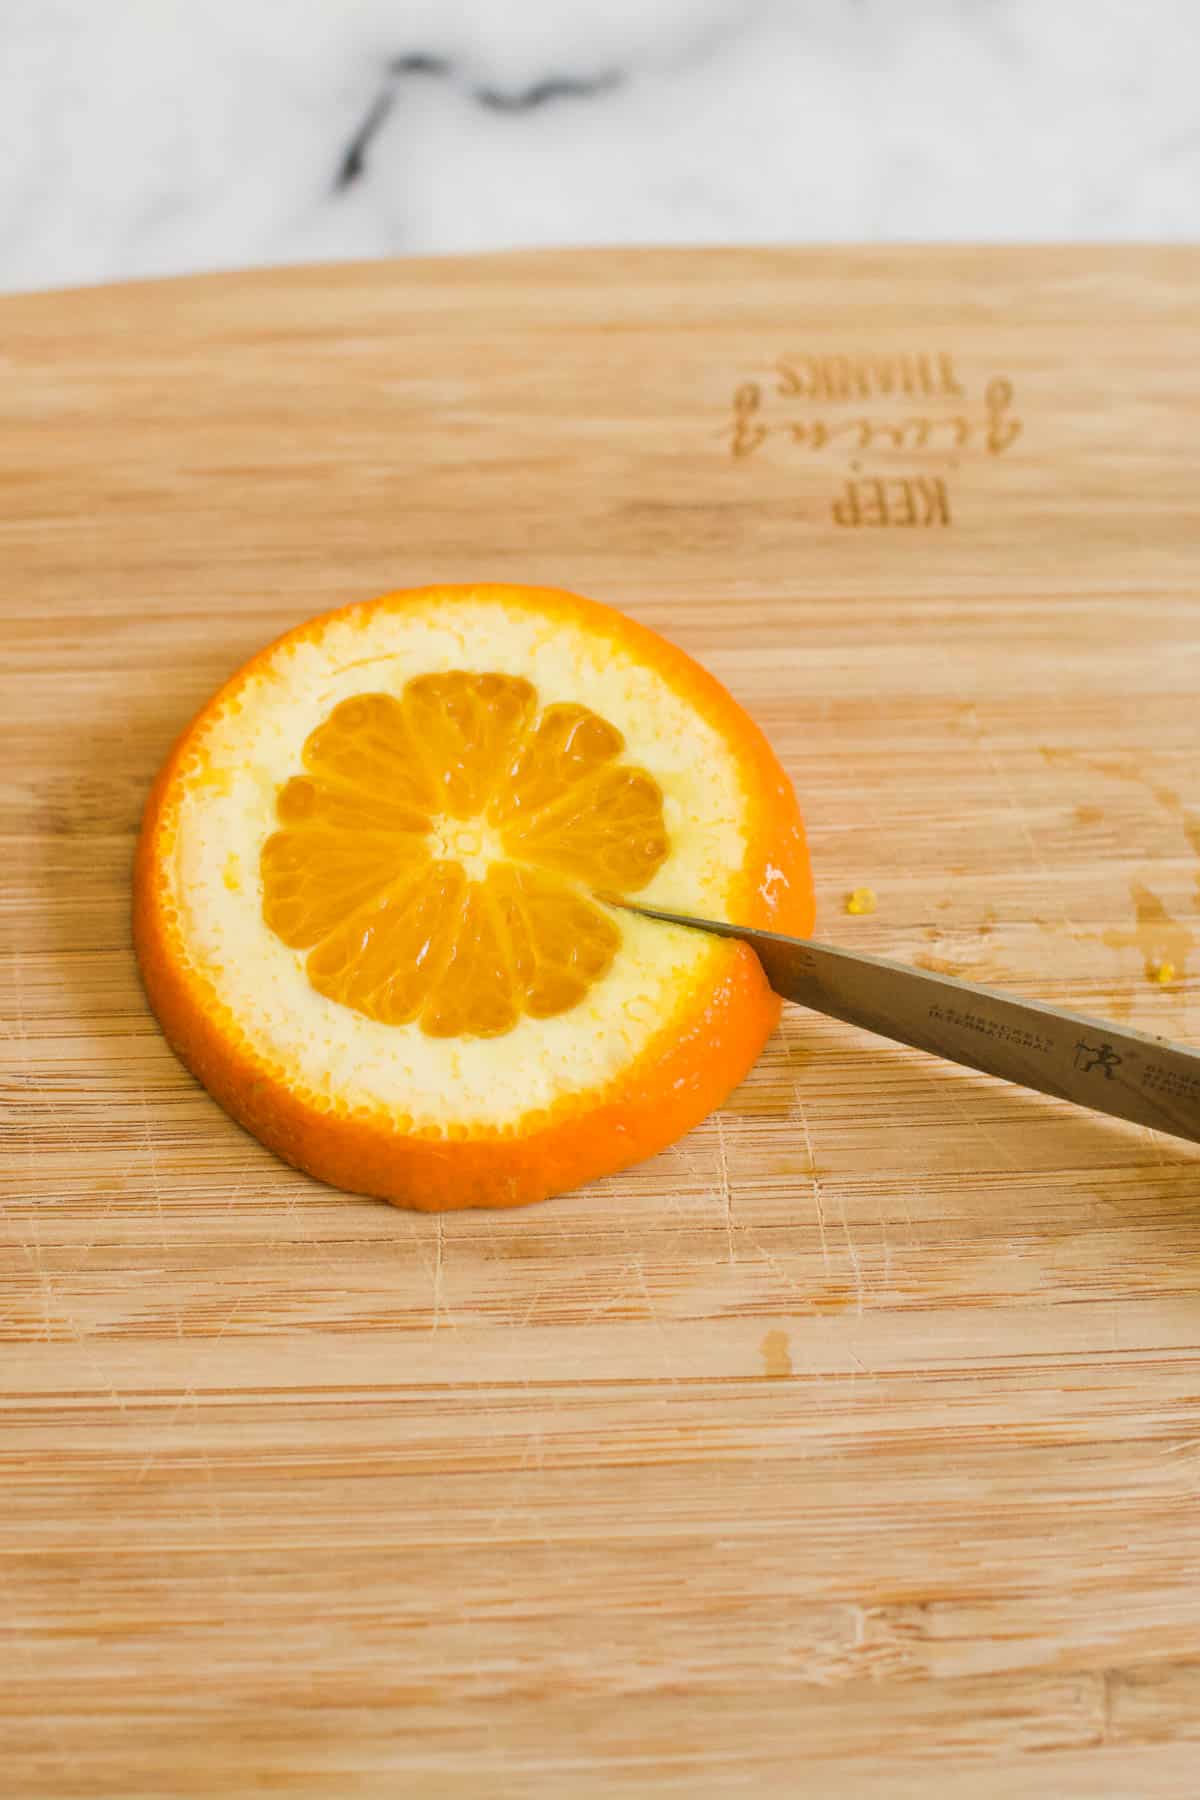 https://www.cupcakesandcutlery.com/wp-content/uploads/2022/09/how-to-make-an-orange-spiral-garnish.jpg